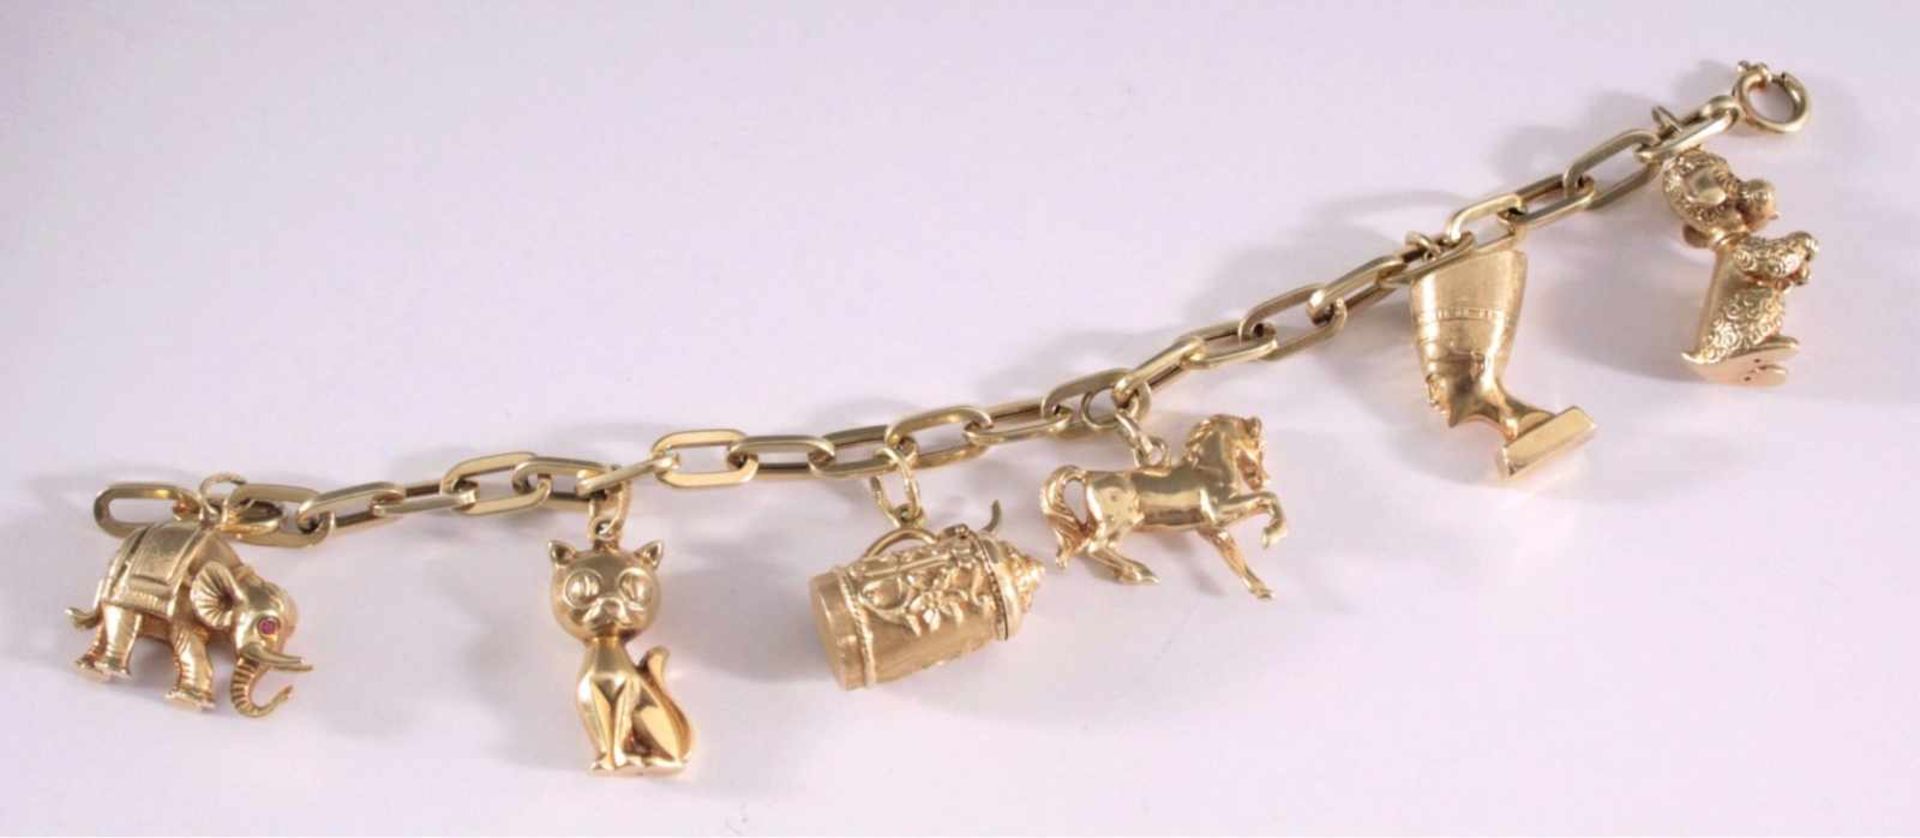 Bettelarmband aus 14 Karat GelbgoldKettengliederarmband mit 6 Anhänger u.a. Pudel, Elefant,Pferd, - Image 2 of 2